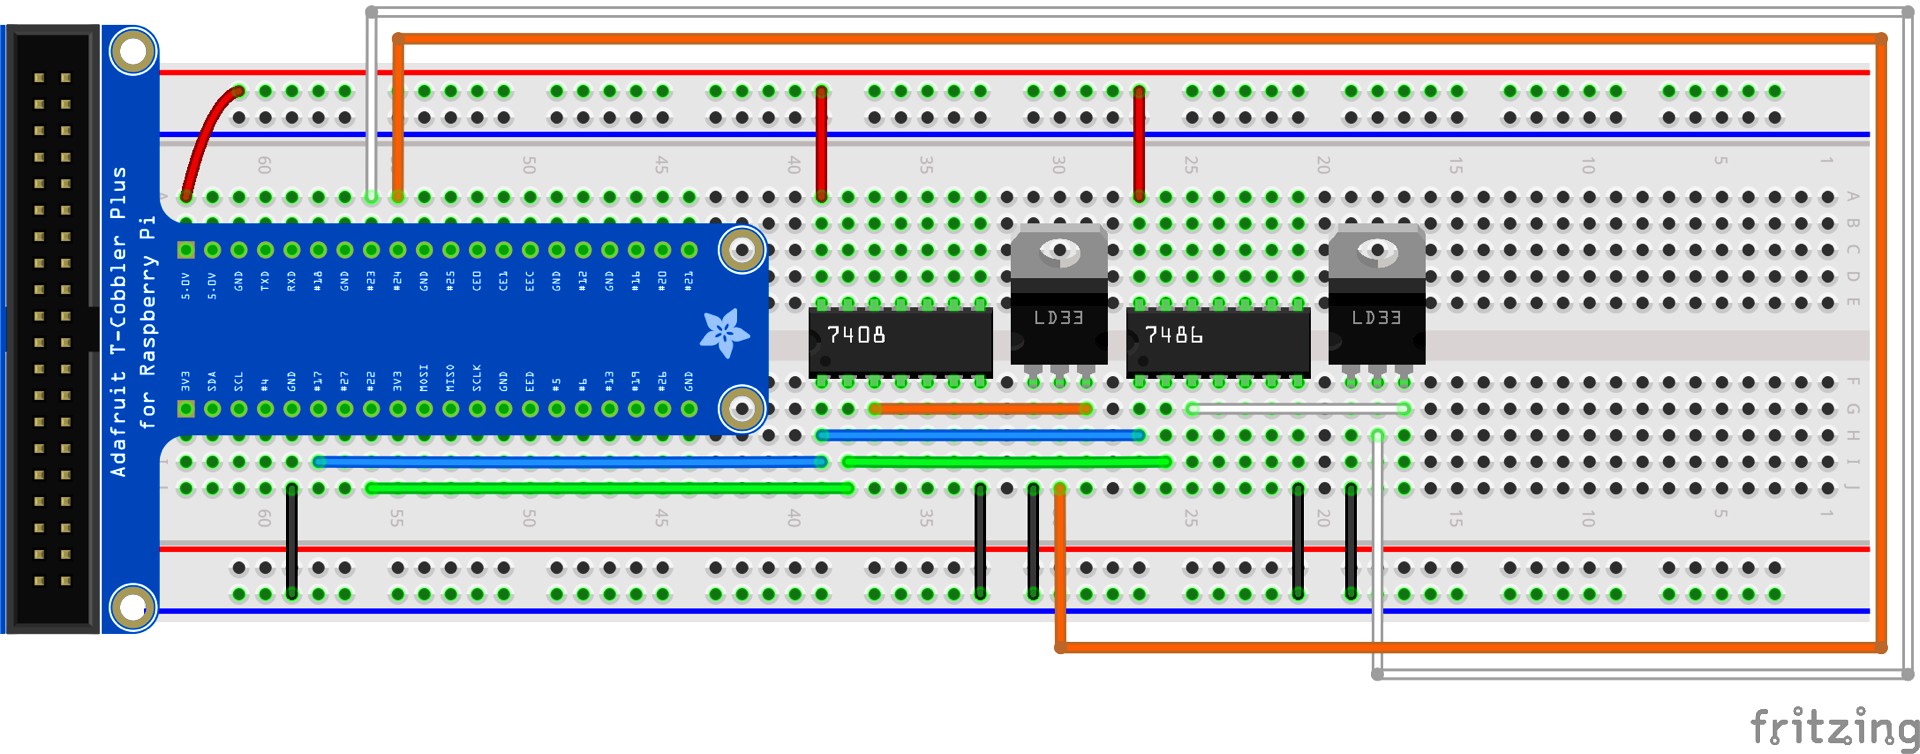 Surprising Creating Circuits The Breadboard Rpi Labs Half Adder Circuit Using Transistors Halfadderbbx Full size